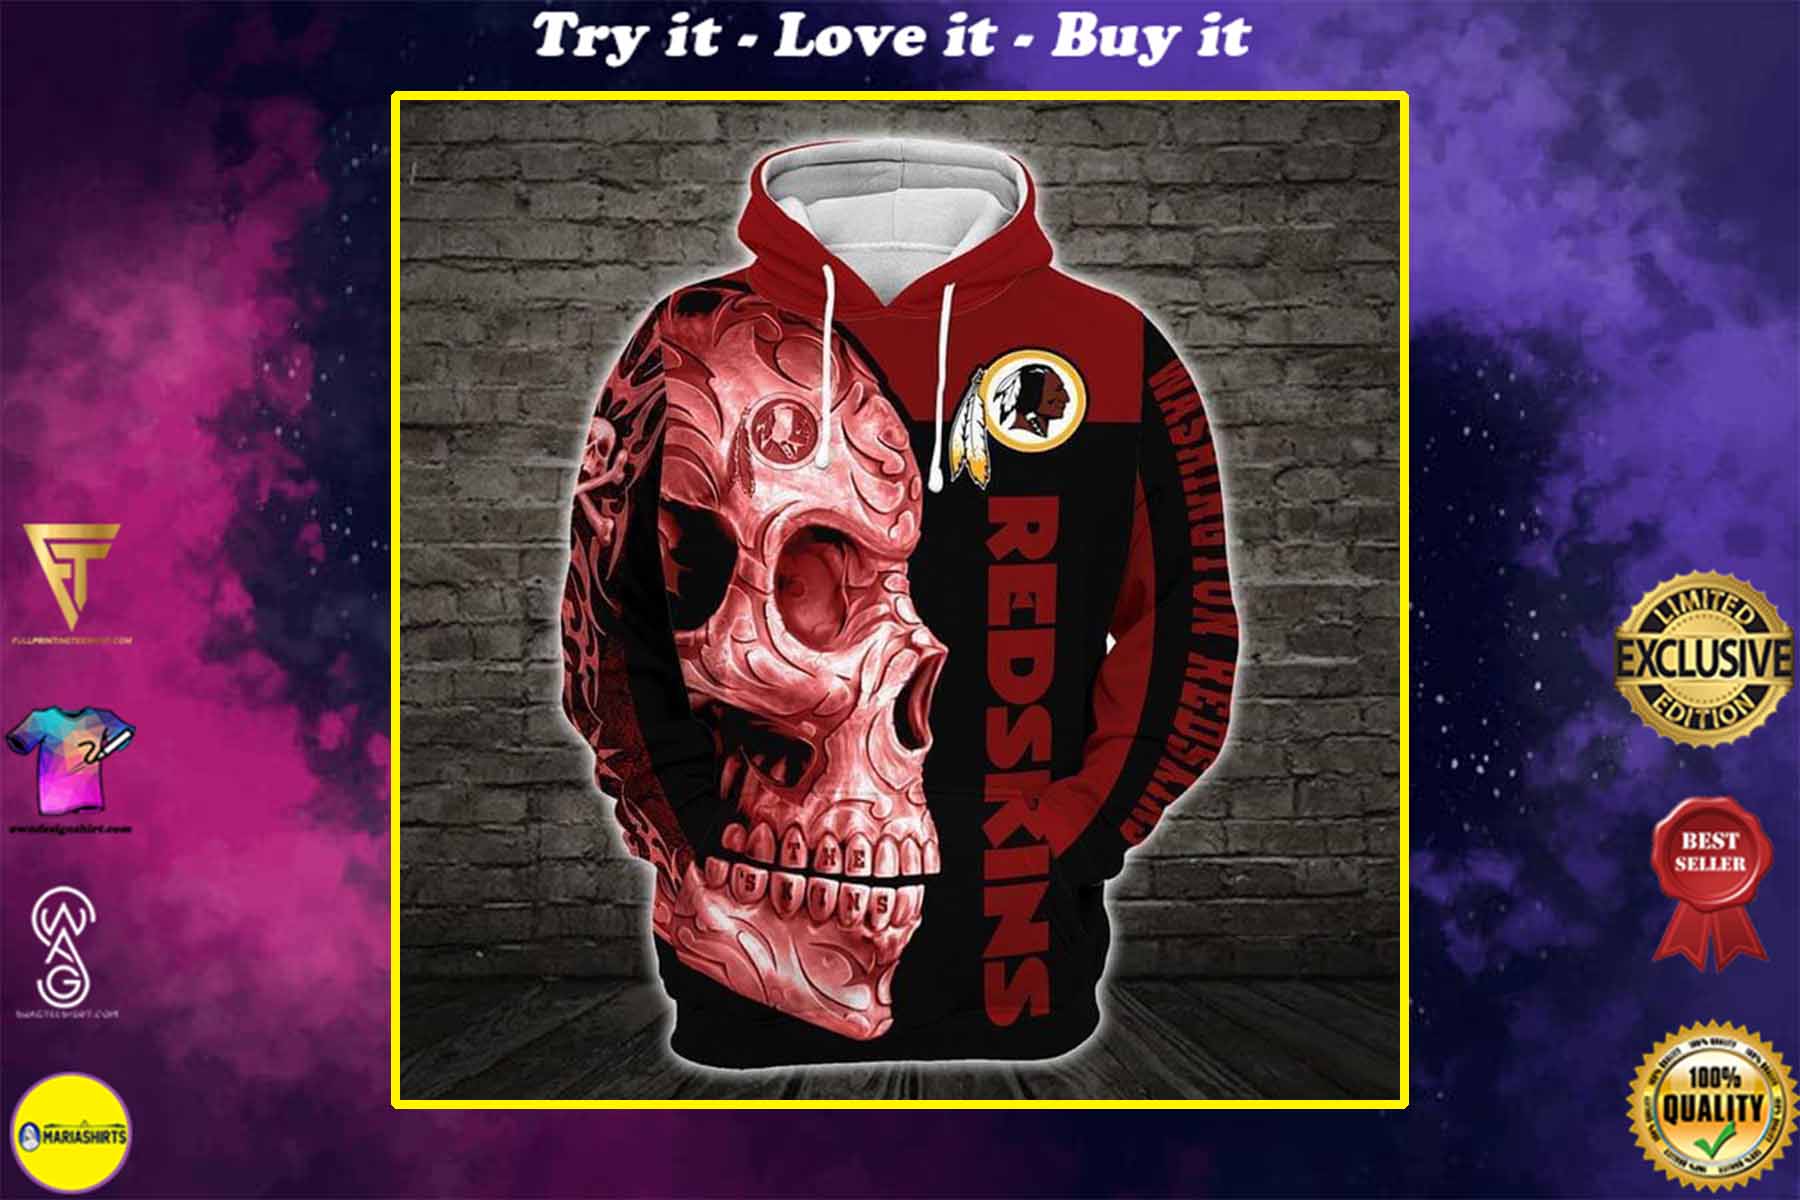 [highest selling] sugar skull washignton redskins football team full over printed shirt - maria